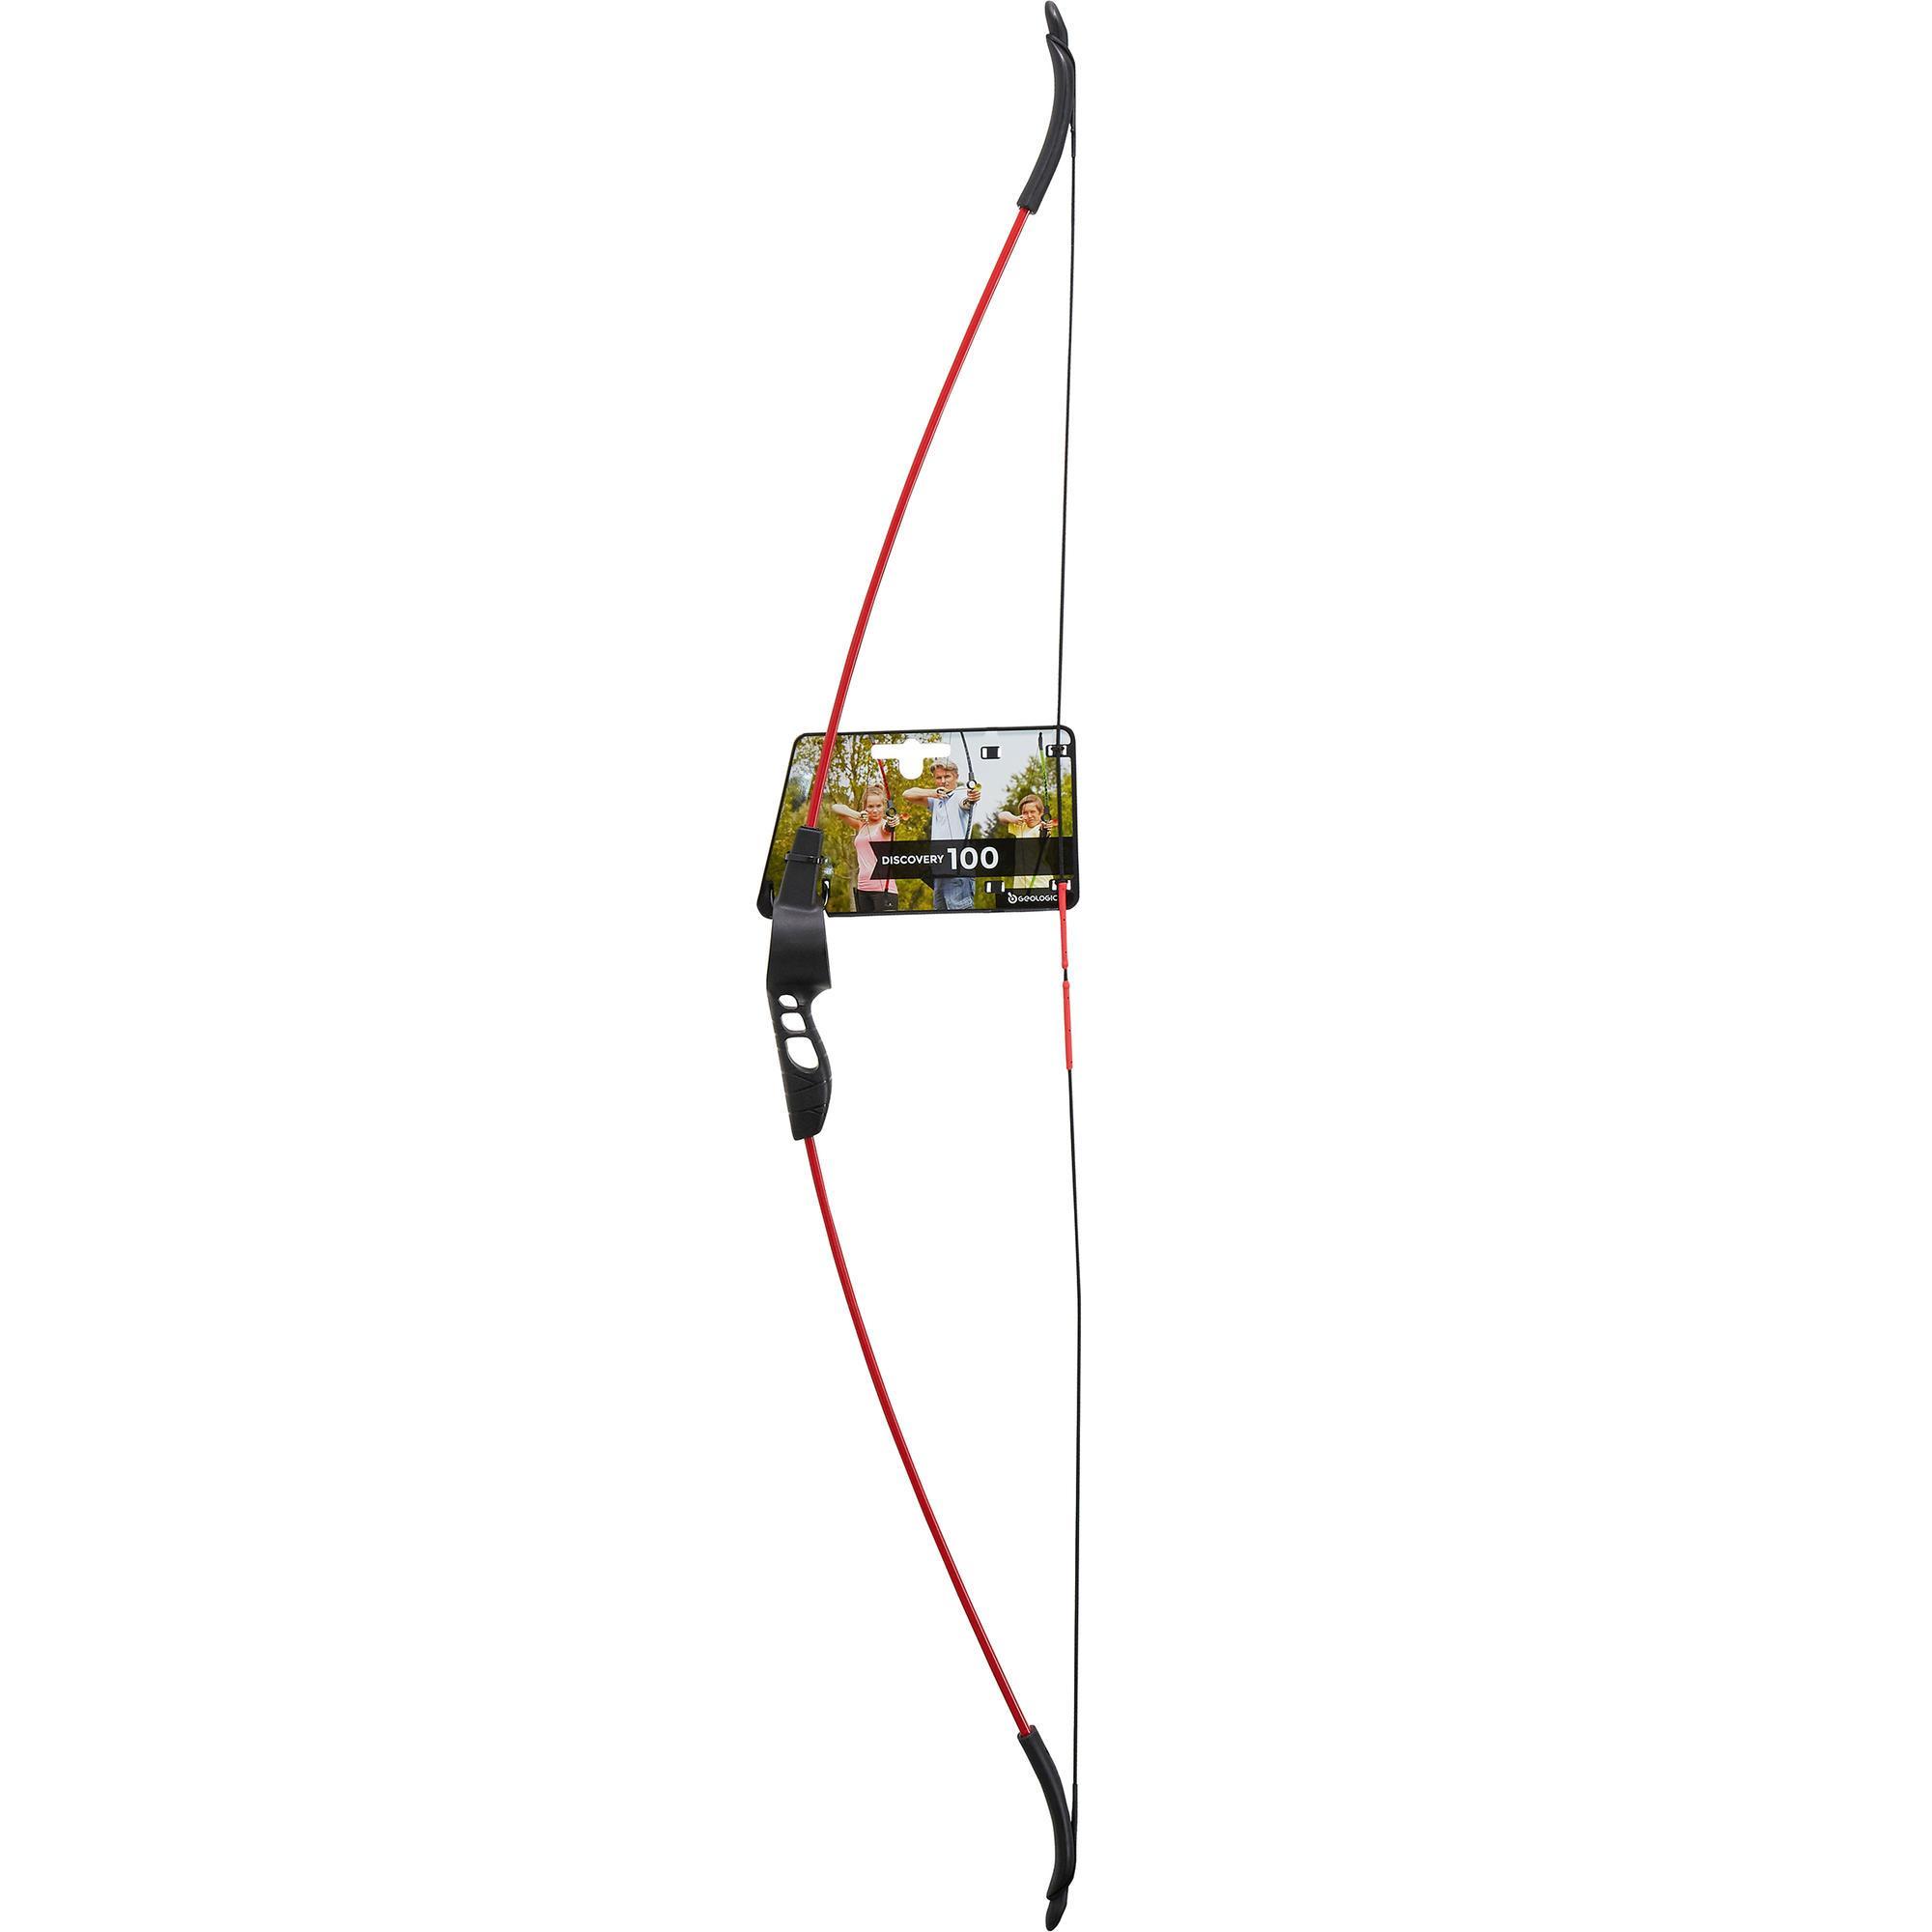 Discovery 100 Archery Bow GEOLOGIC 